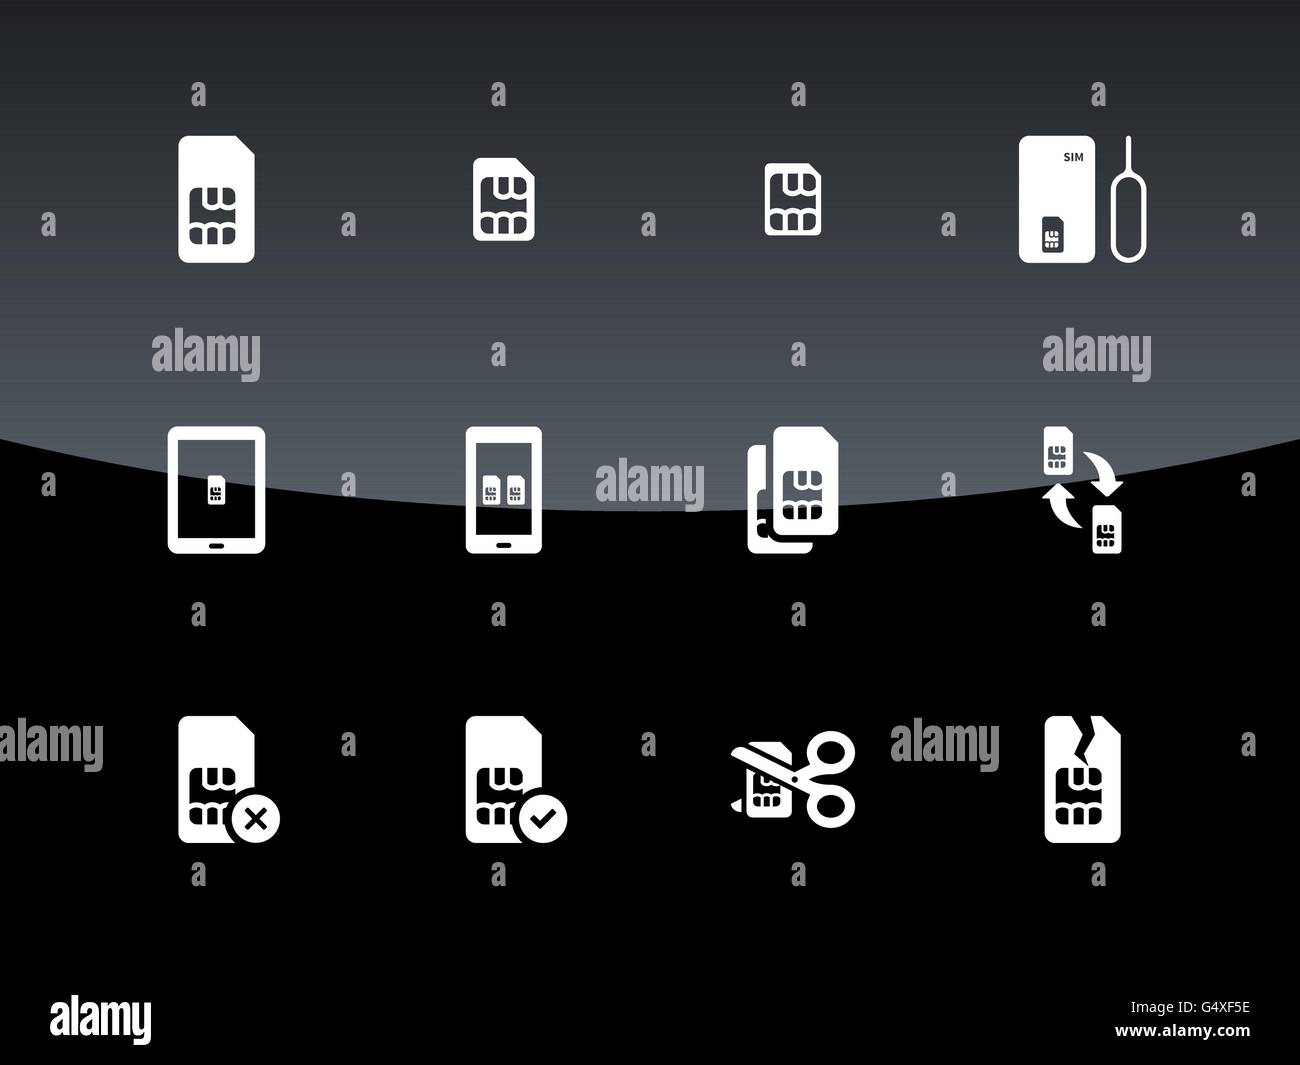 SIM cards mini, micro, nano icons on black background. Stock Vector